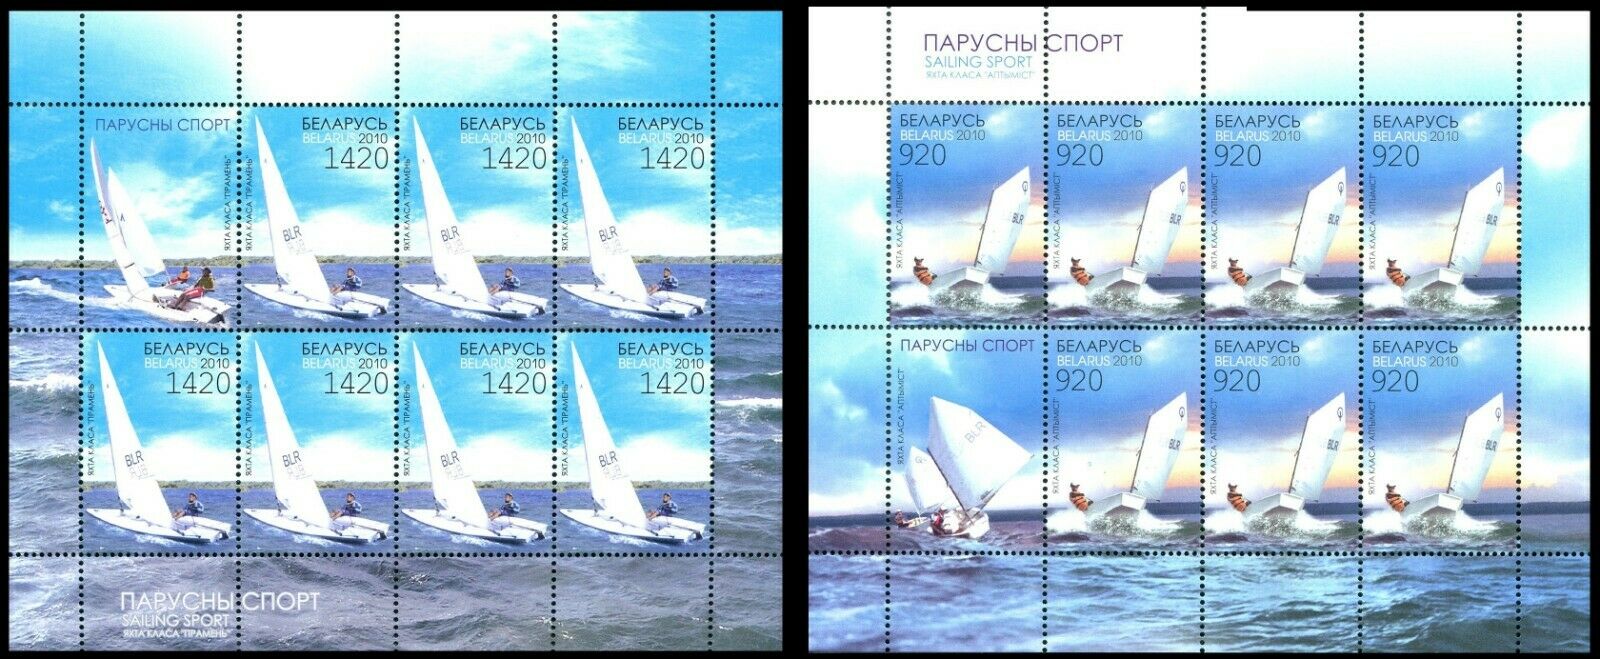 364 - Belarus - 2010 - Sport Sailboats Sailing Yachts 2 Sheetlets Of 7v+labe Mnh